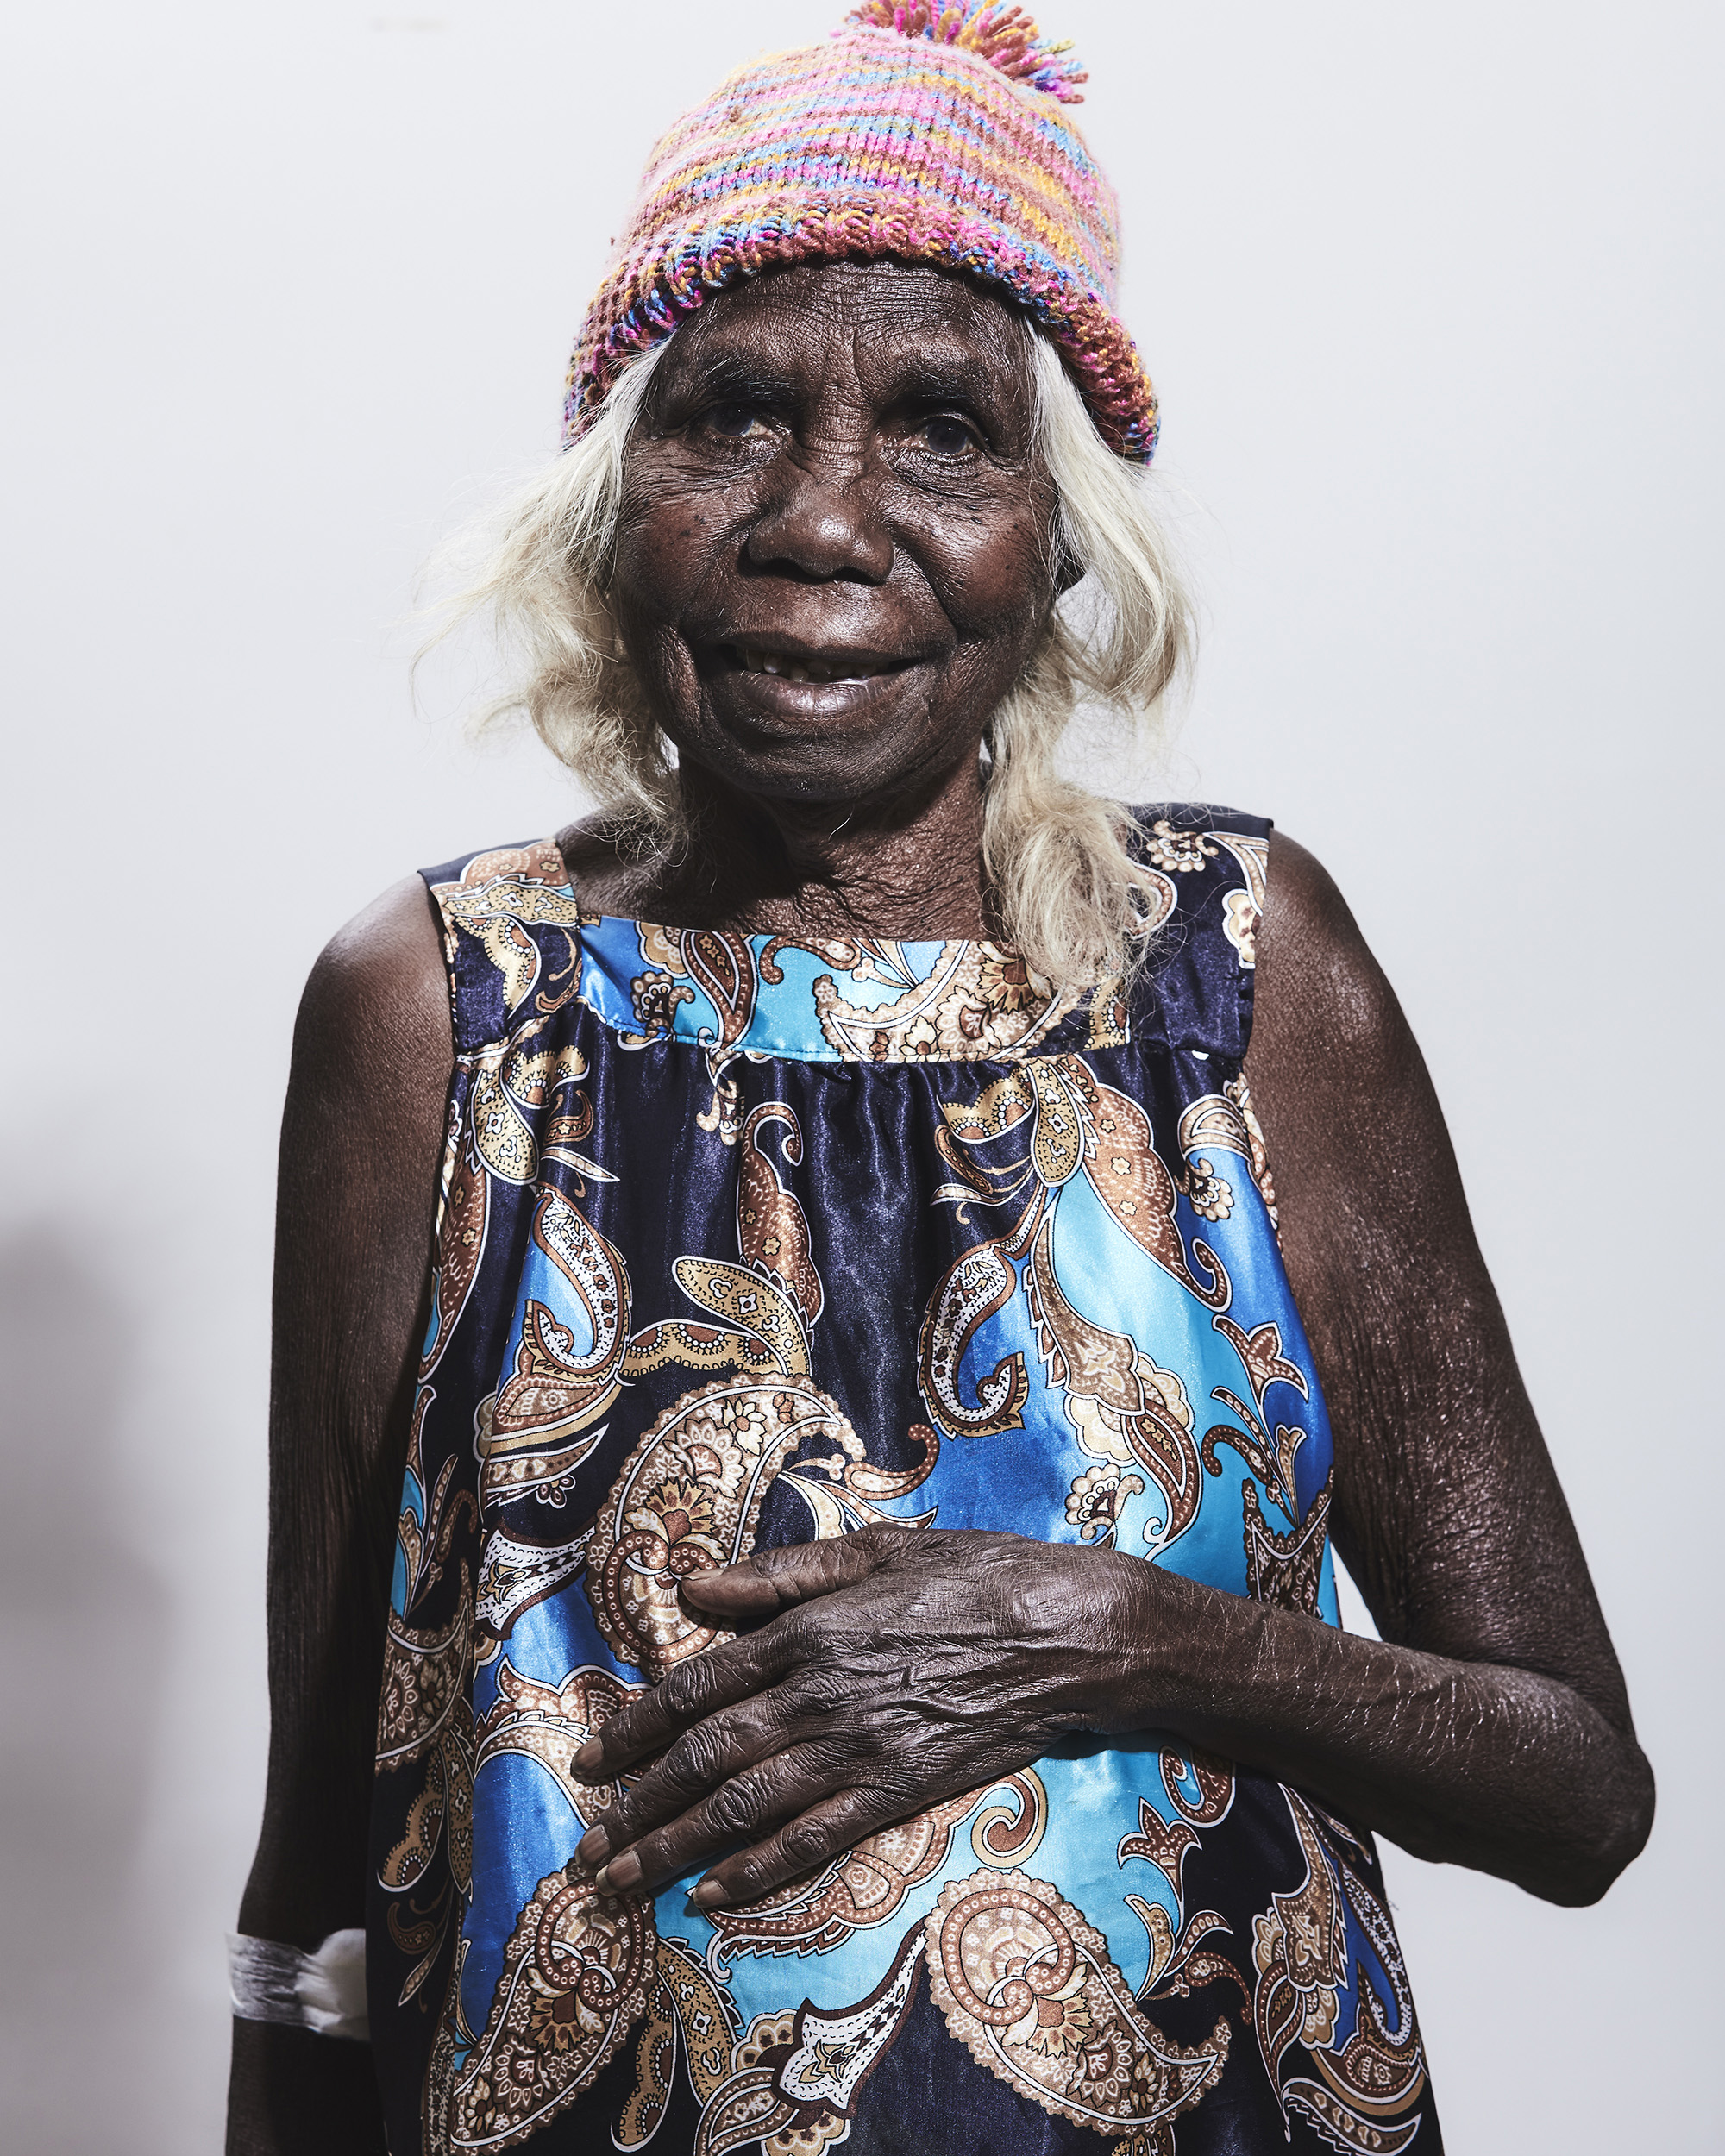 indigenous-artists-thom-rigney-professional-photographer-documentary-portrait-004